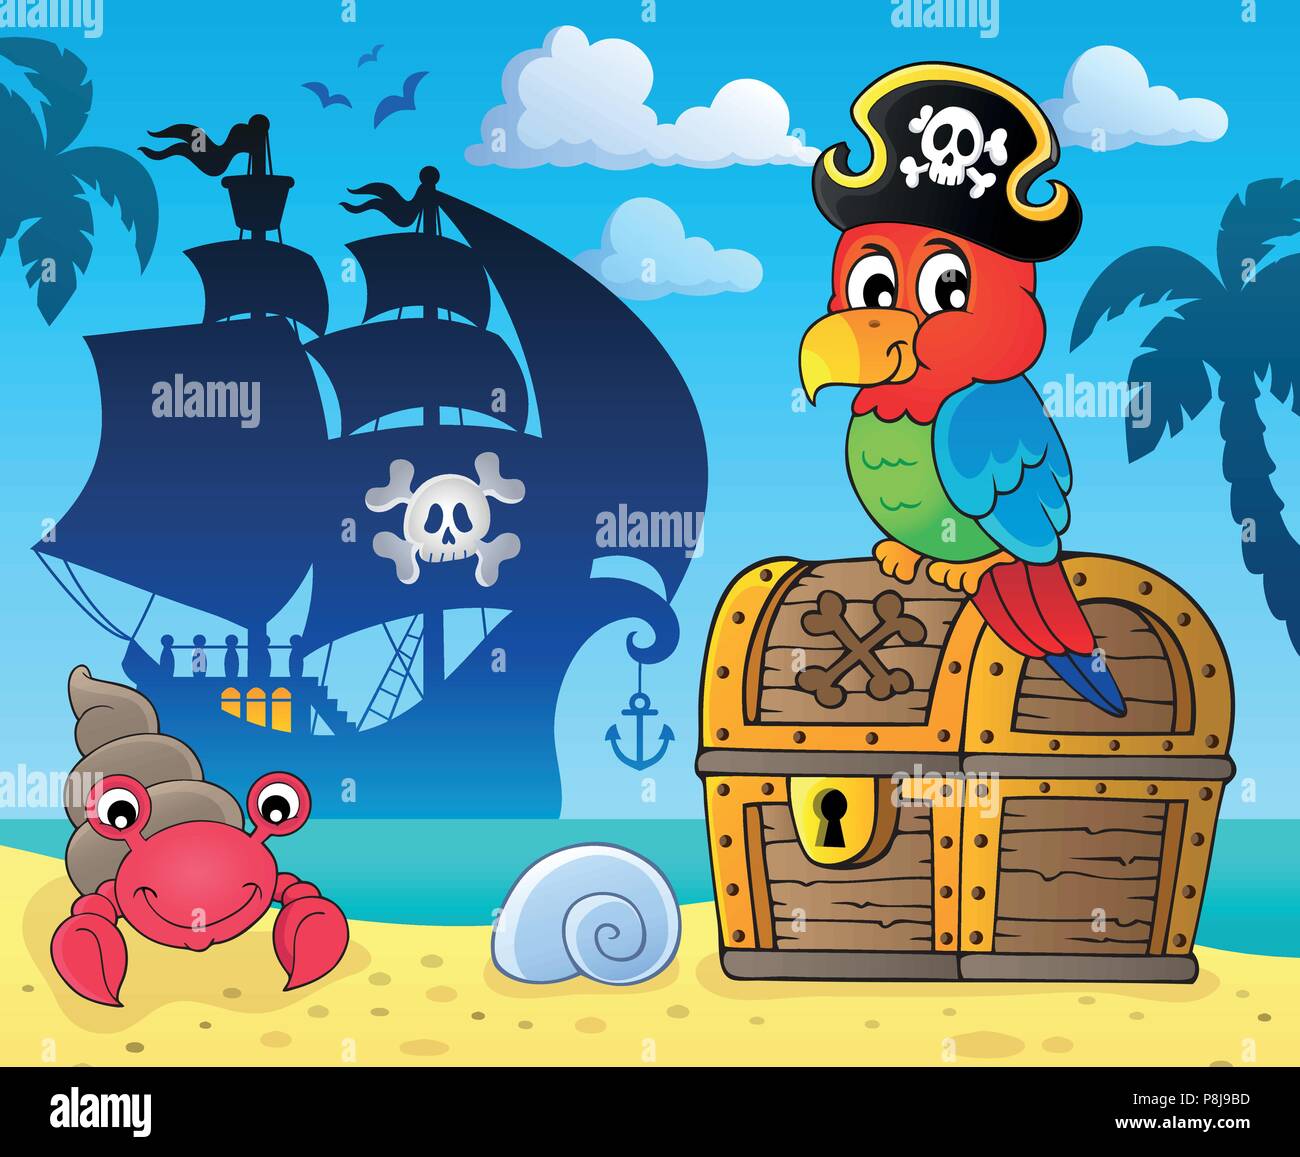 Пират с сундуком и попугаем